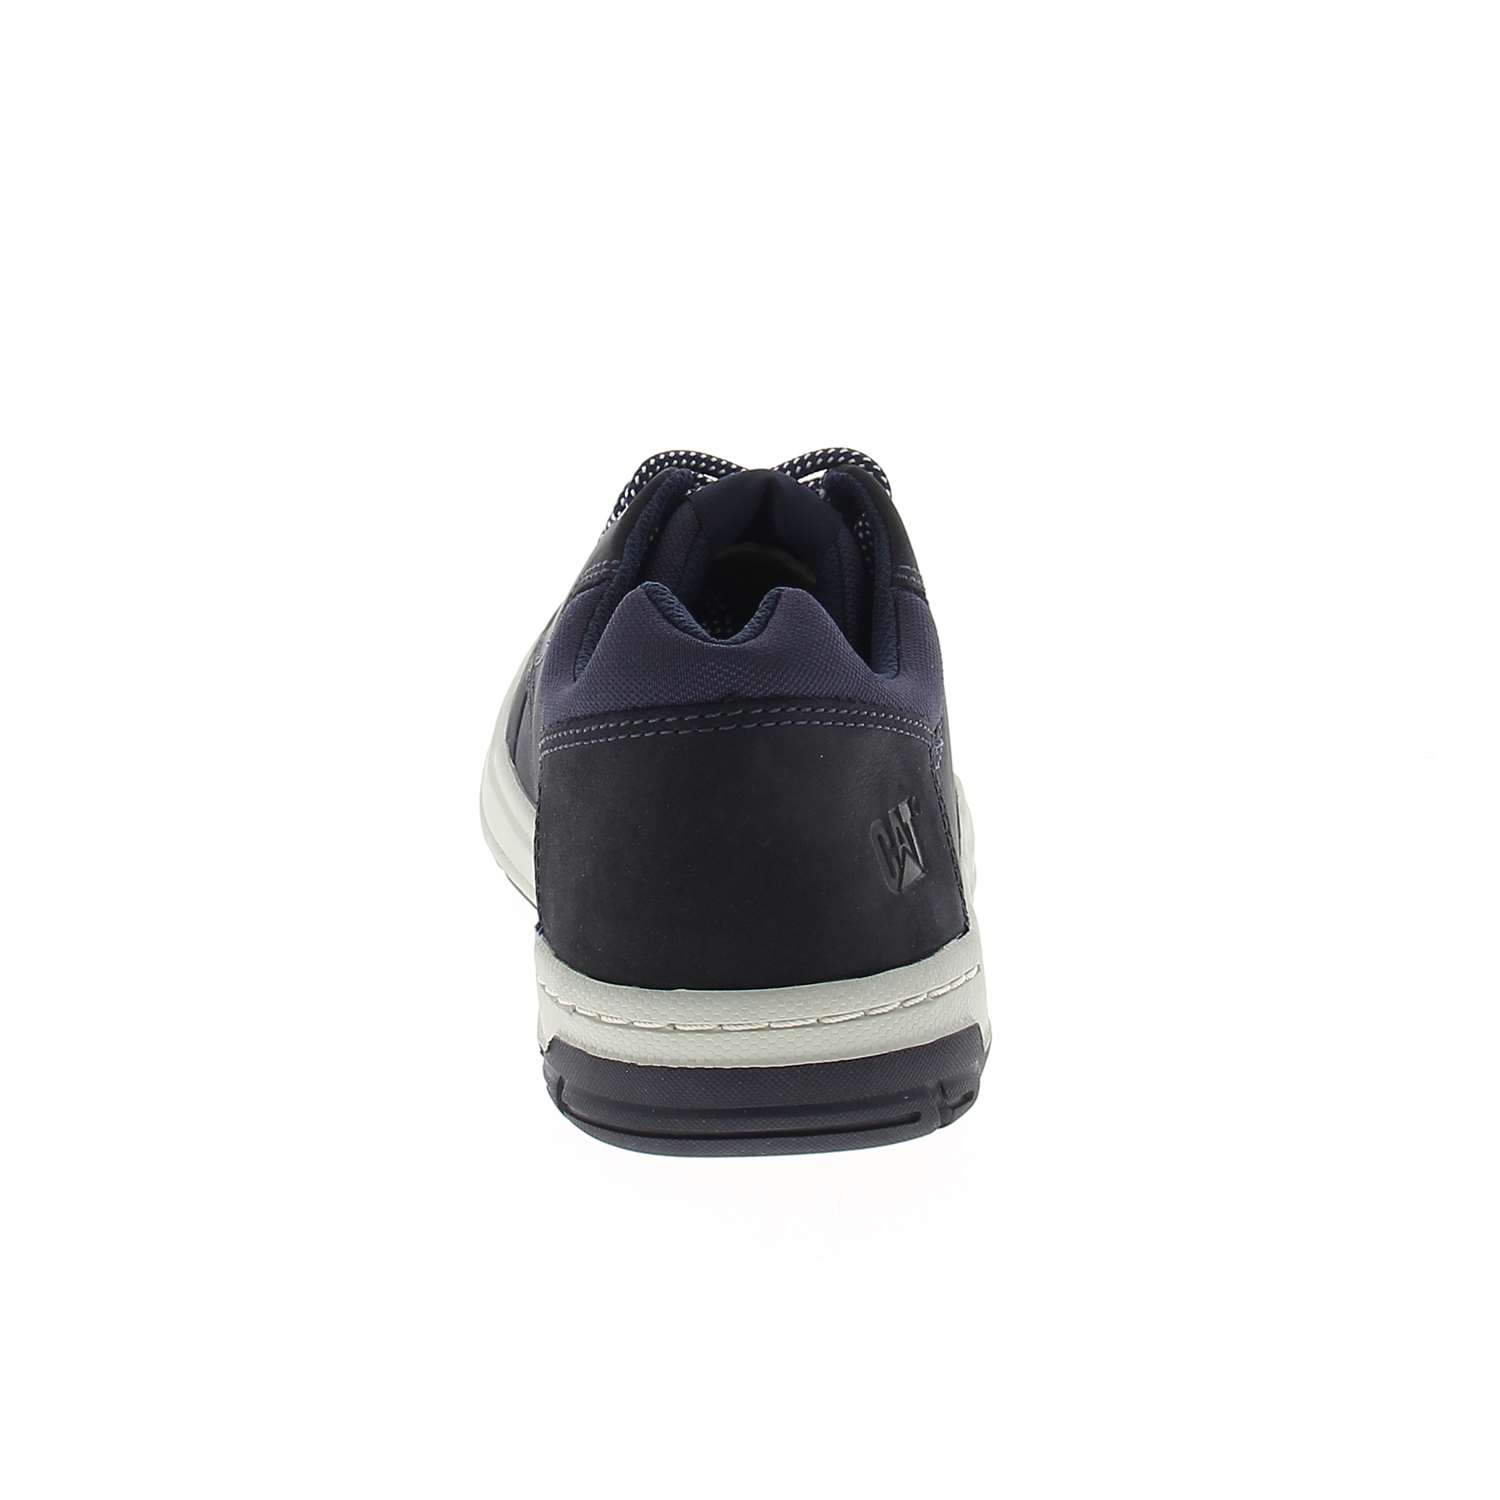 04 - COLFAX LOW - CATERPILLAR - Chaussures à lacets - Nubuck